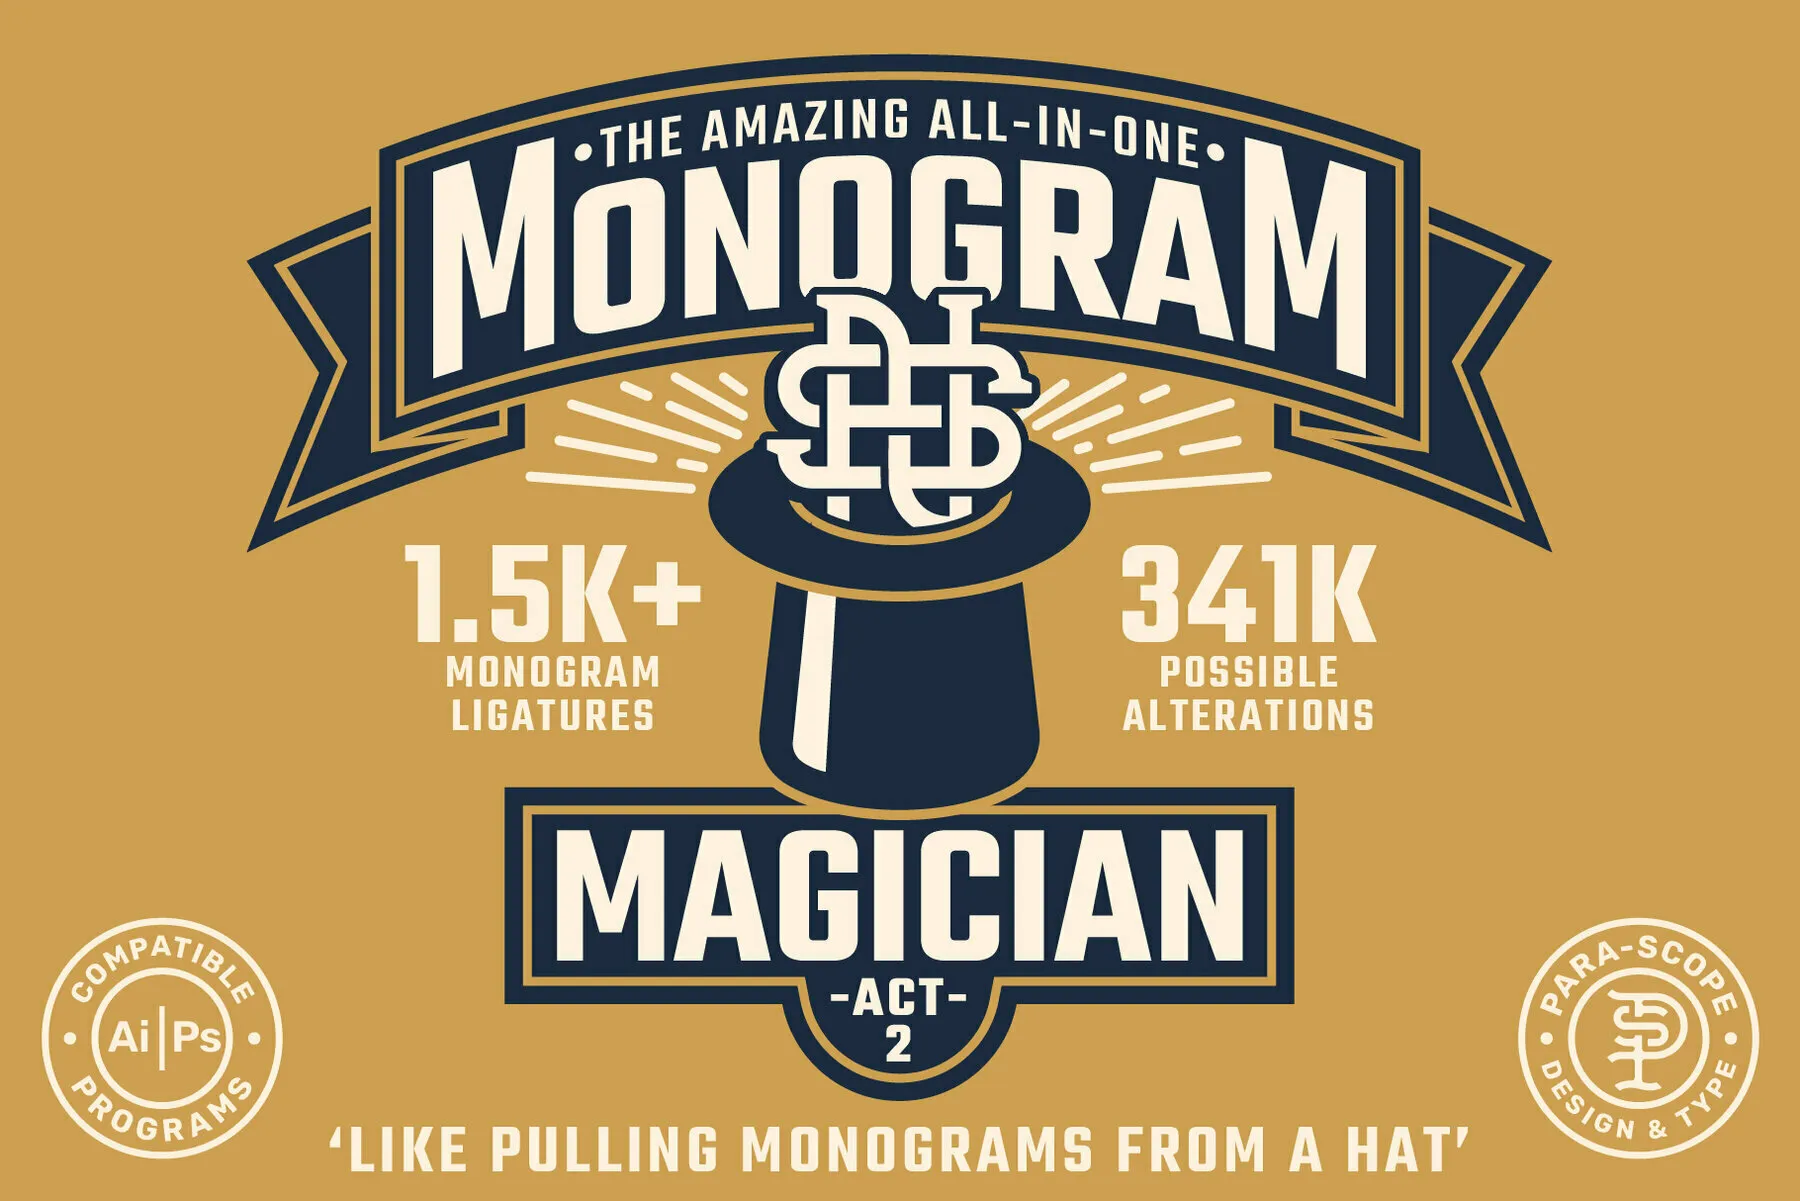 MONOGRAM MAGICIAN - ACT 2